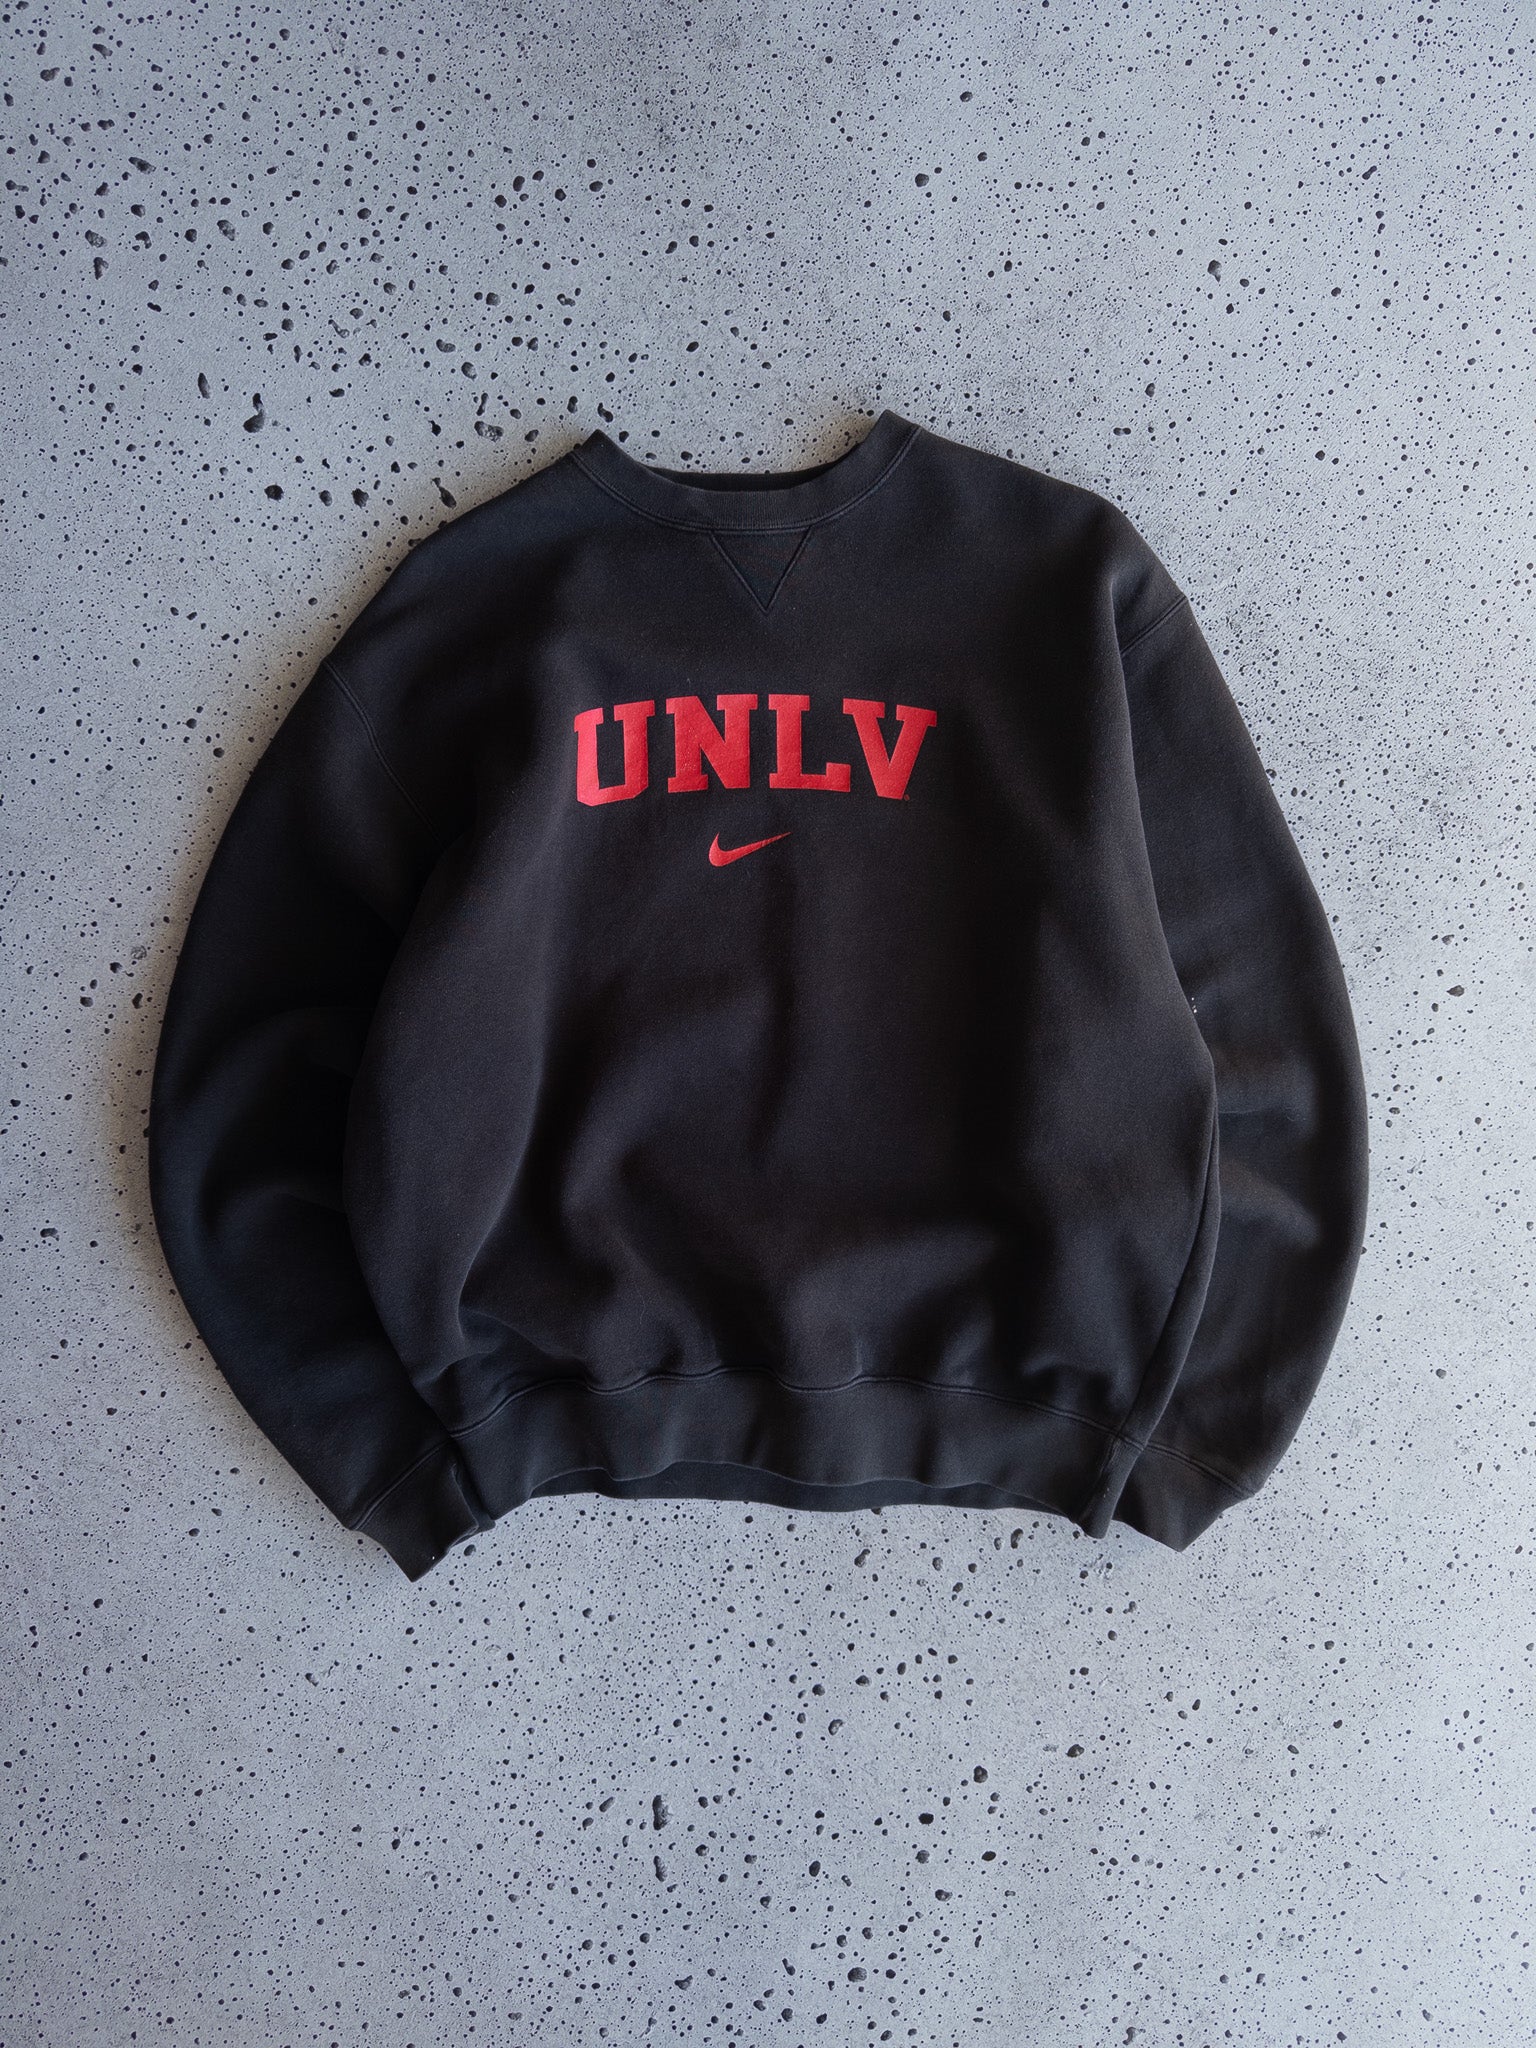 Vintage University of Las Vegas Nike Sweatshirt (M)